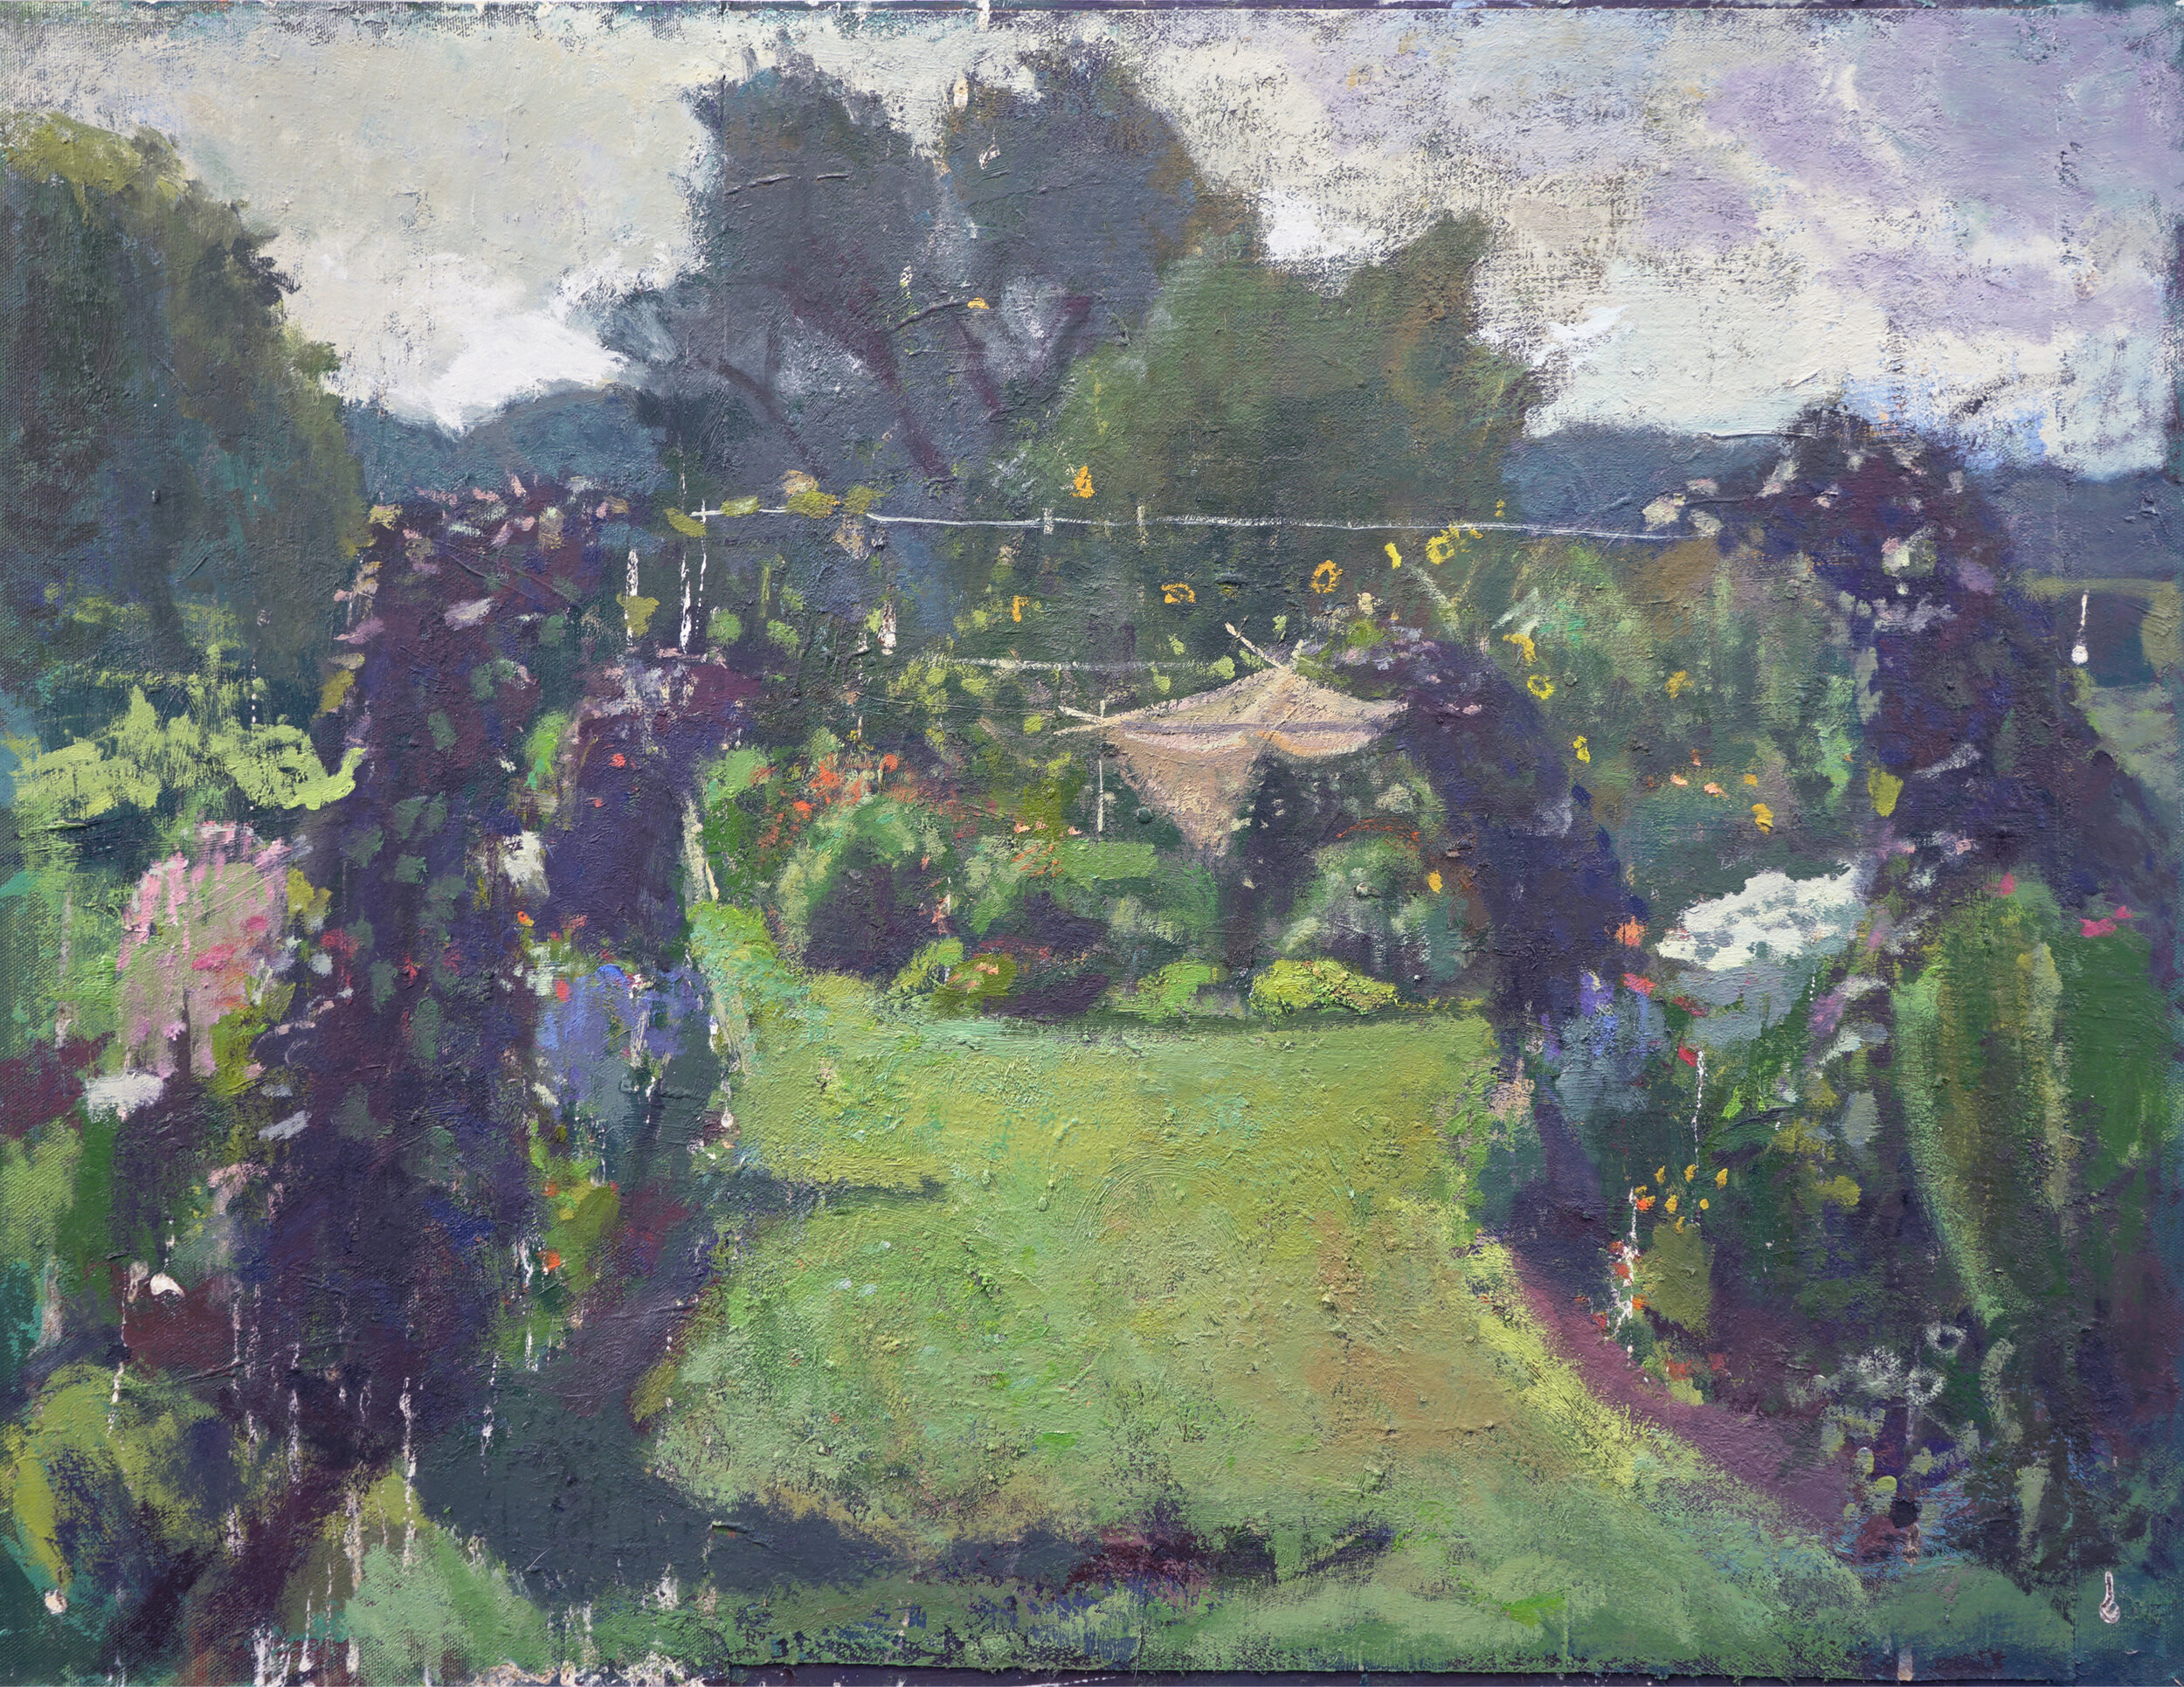 Garden with Climbing Beans, 20" x 26", Oil on Mounted Linen, 2020